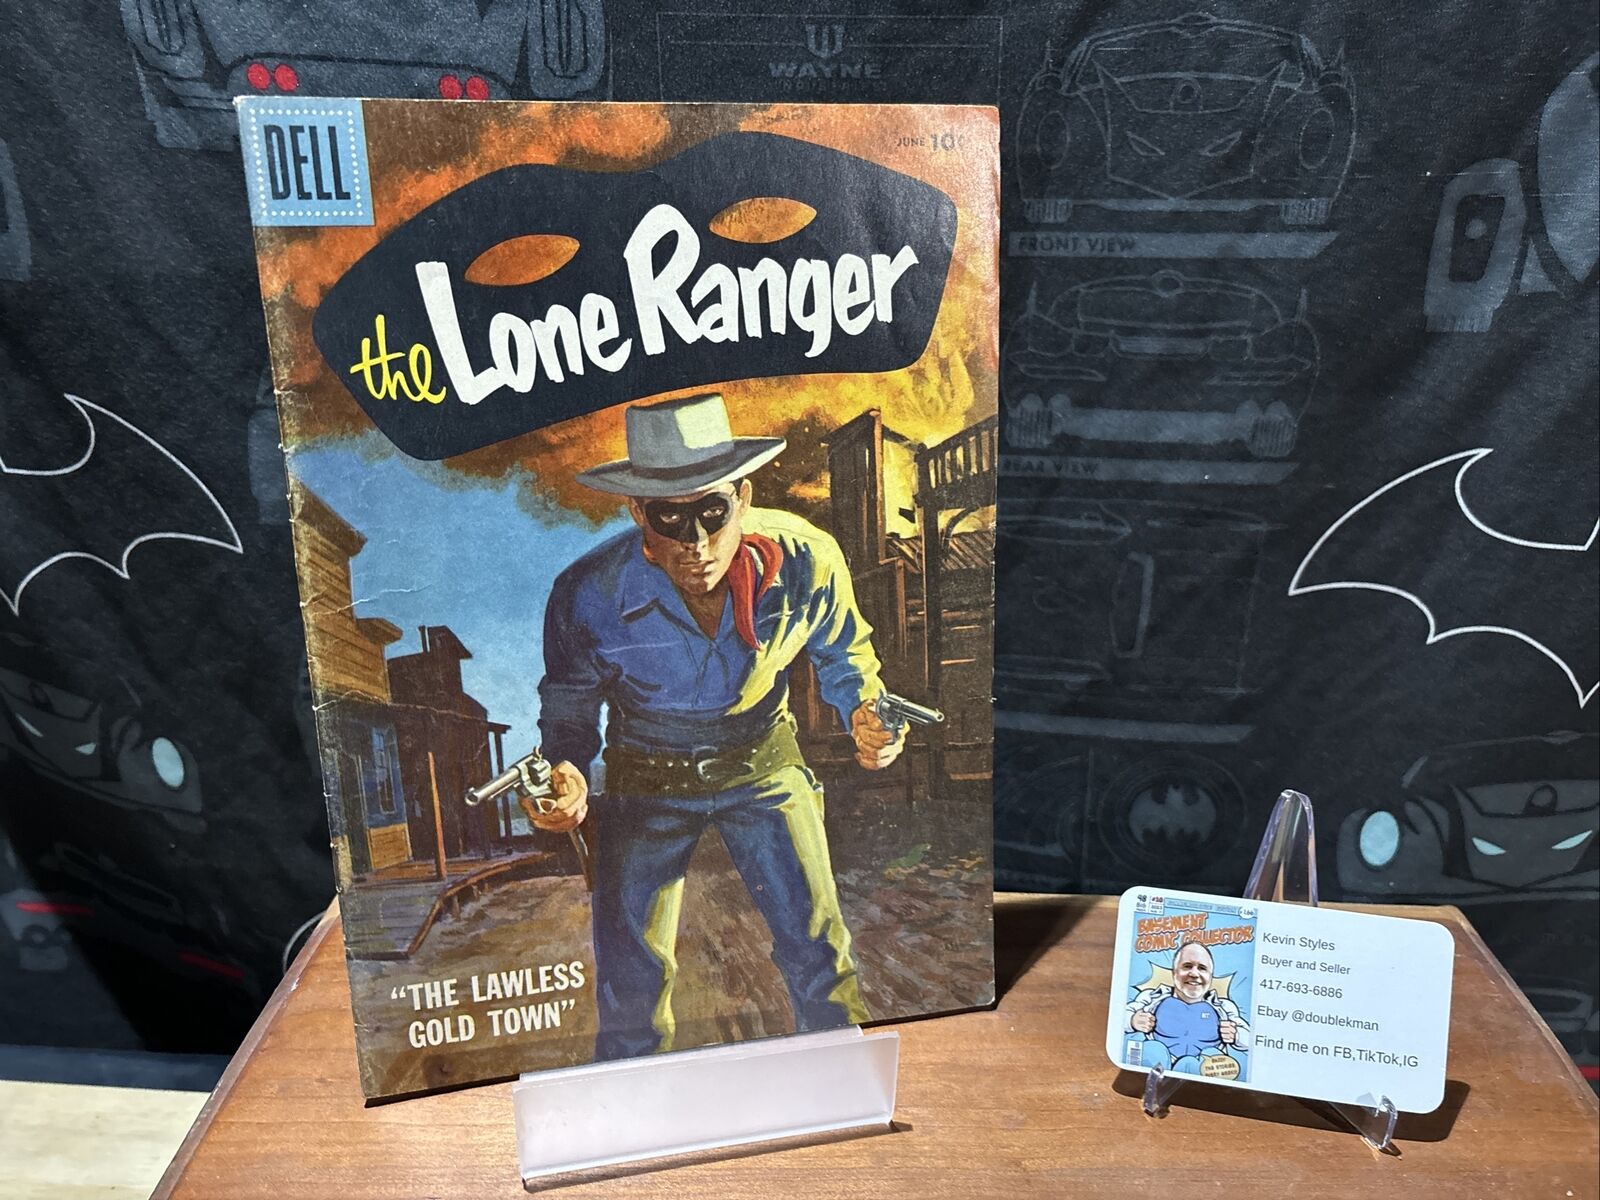 The Lone Ranger #108 (1957): \